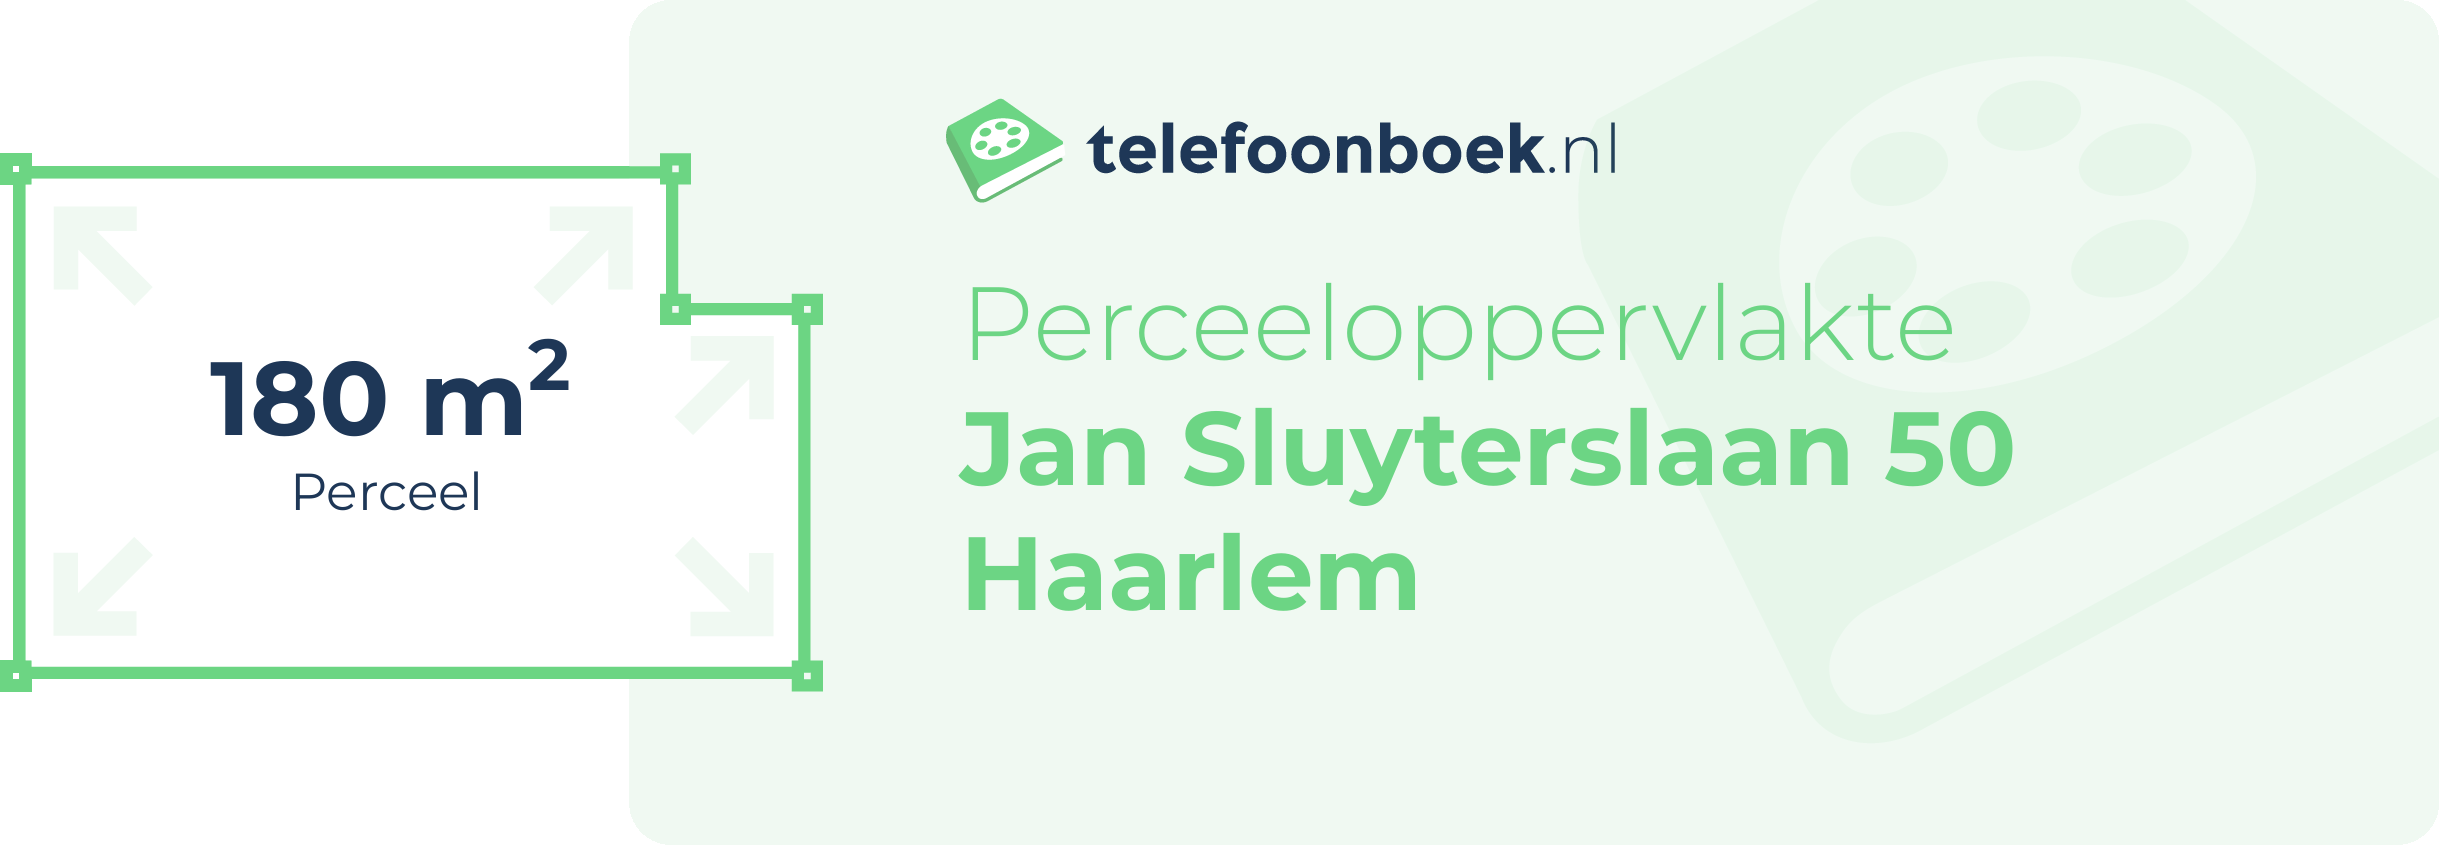 Perceeloppervlakte Jan Sluyterslaan 50 Haarlem